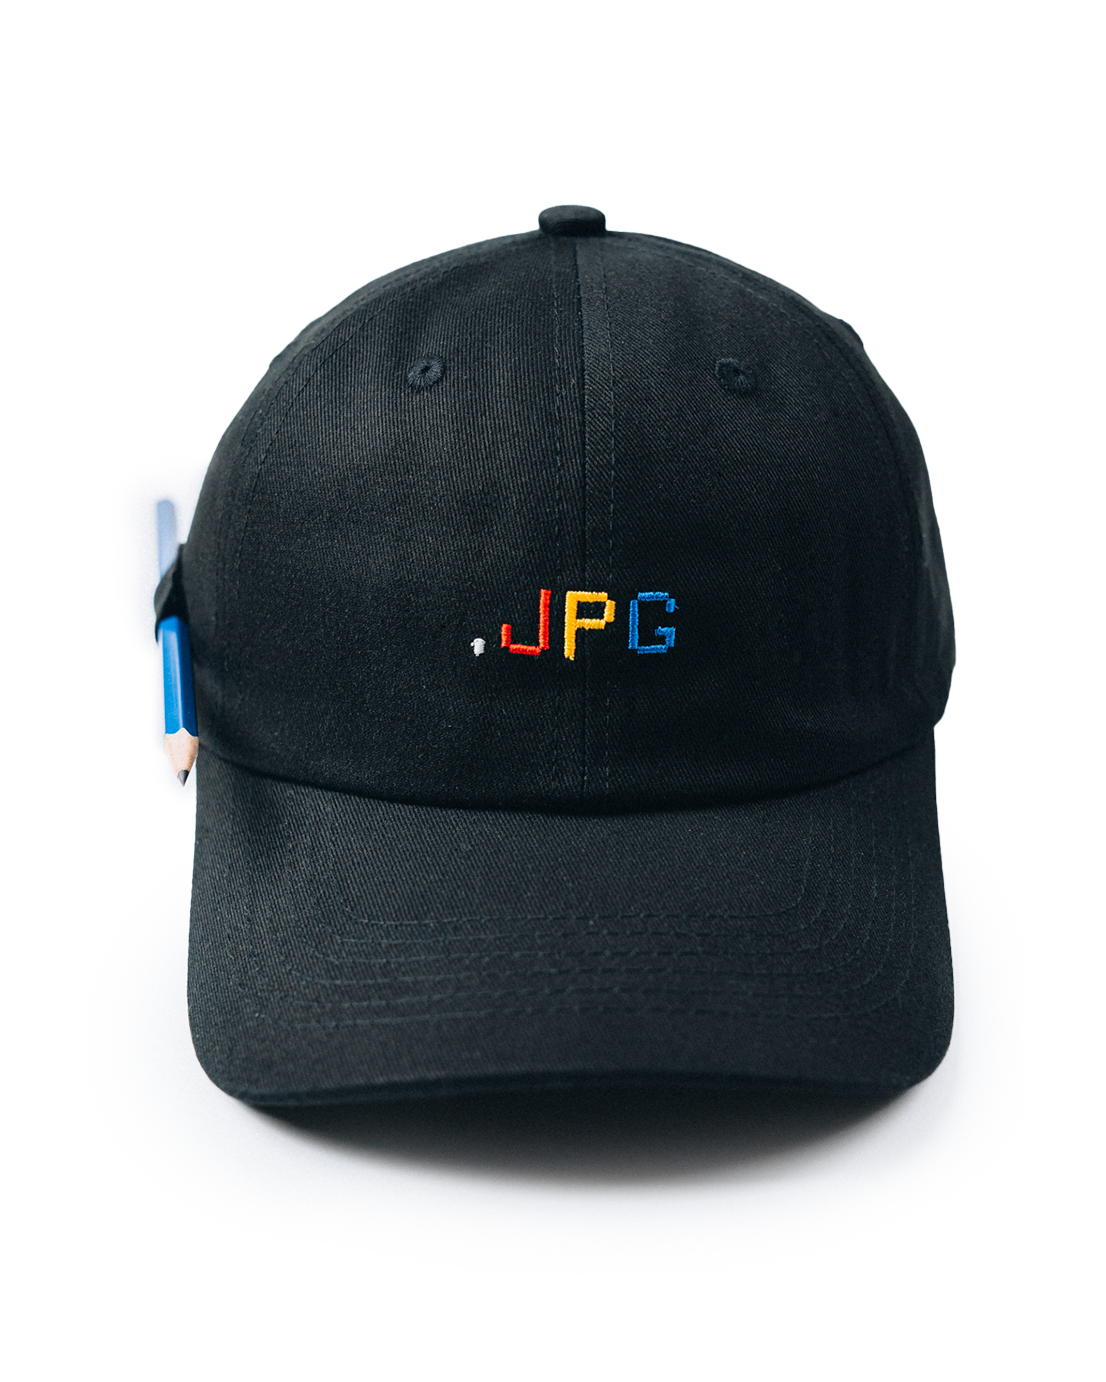 JPG Dad Hat